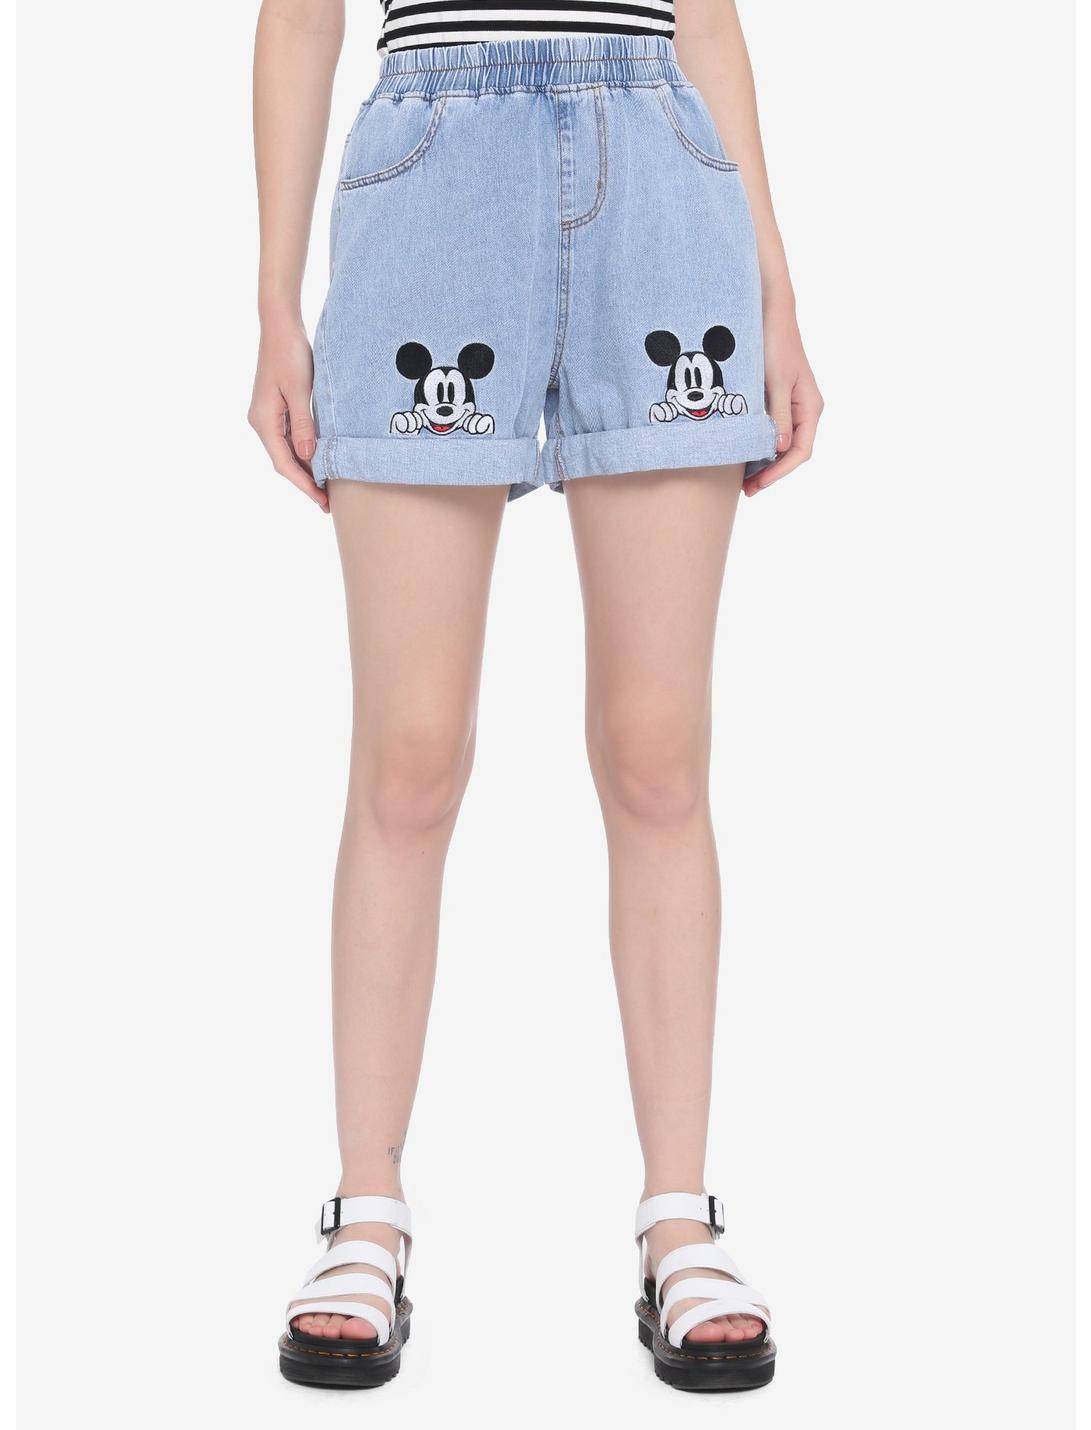 Disney Mickey Mouse Elastic High-Waisted Denim Shorts, MULTI, hi-res